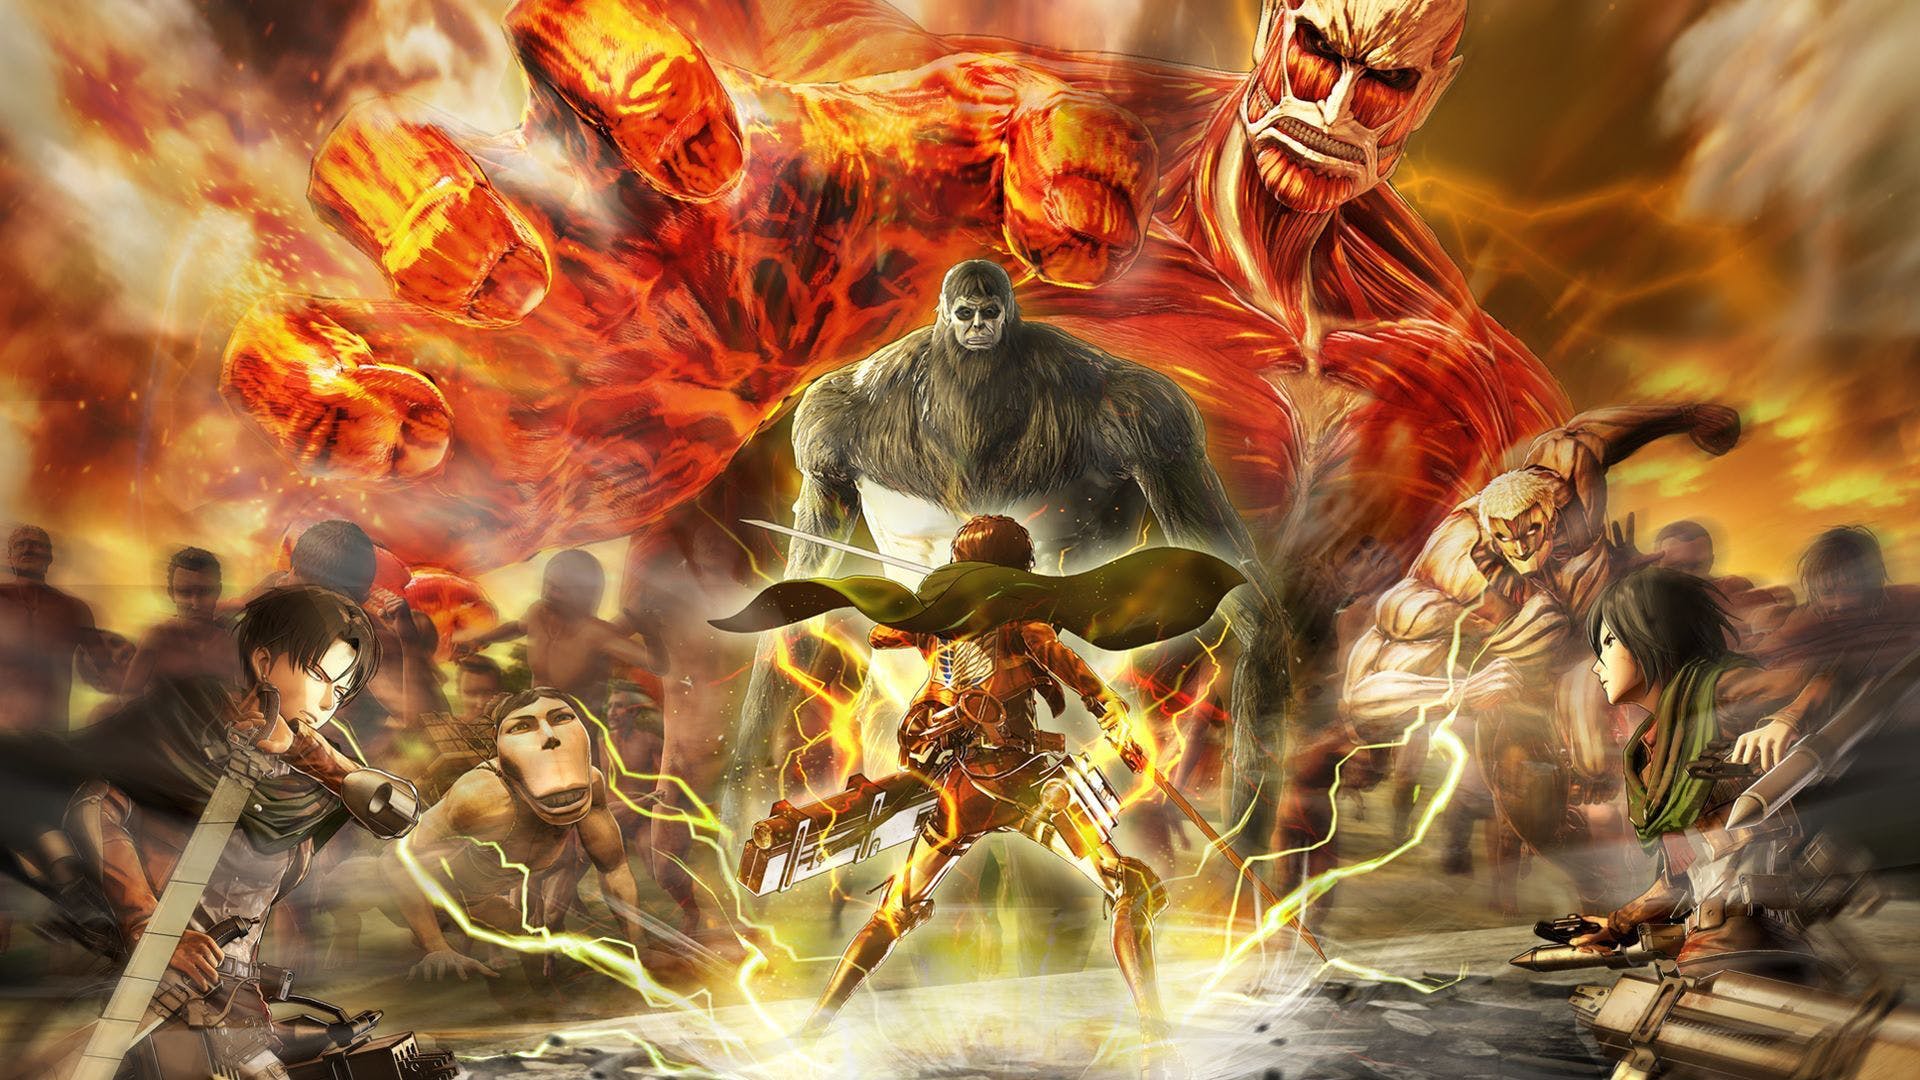 Attack on Titan 2: Final Battle DLC Released. The Nerd Stash